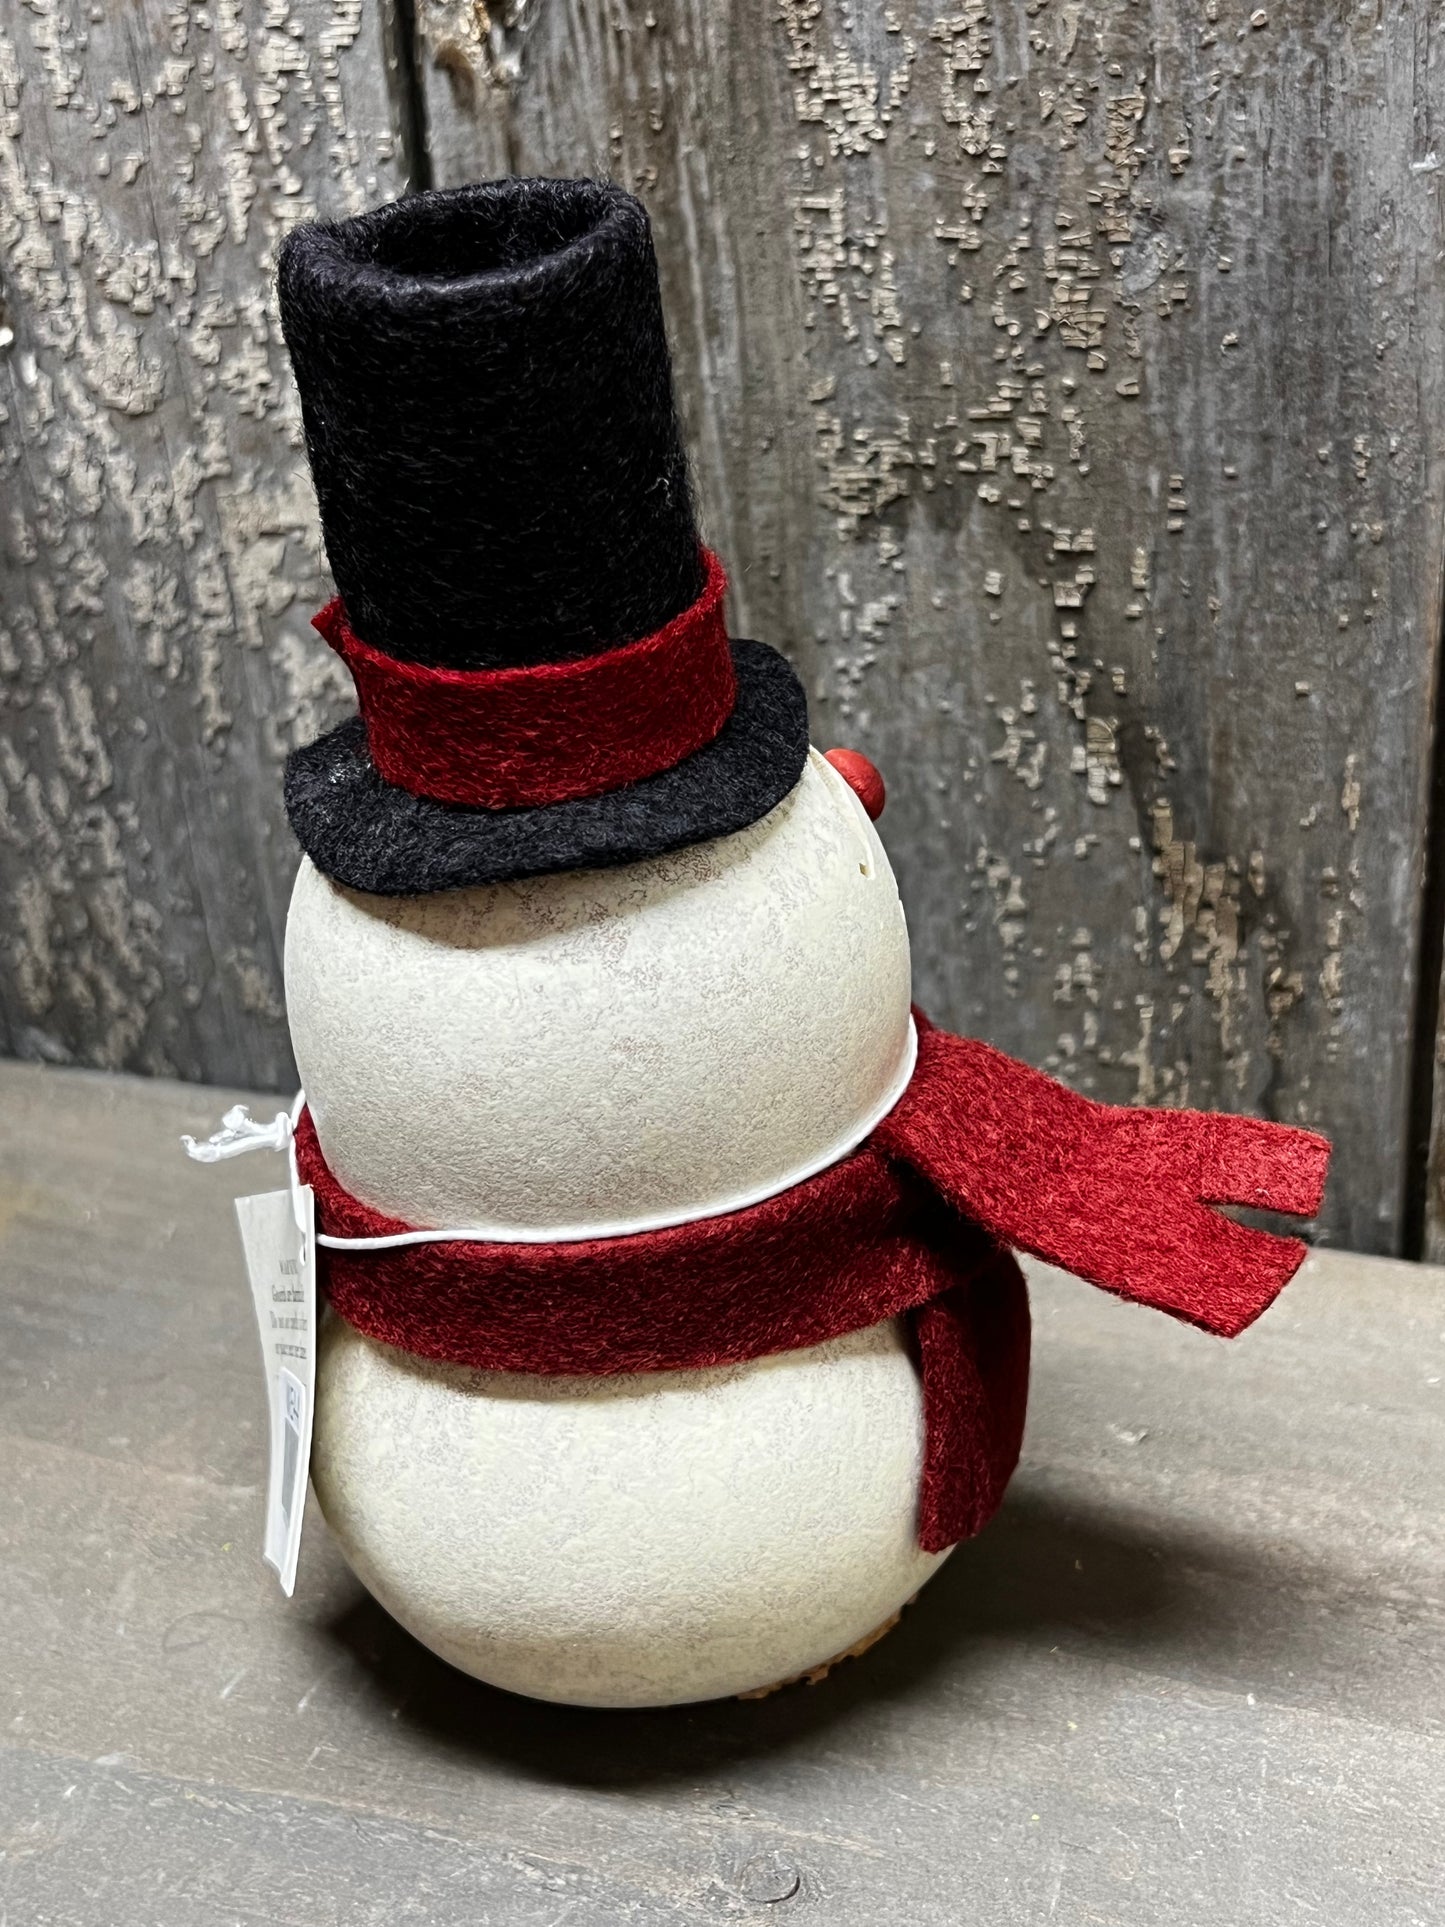 Snowman Gourd, EASTON